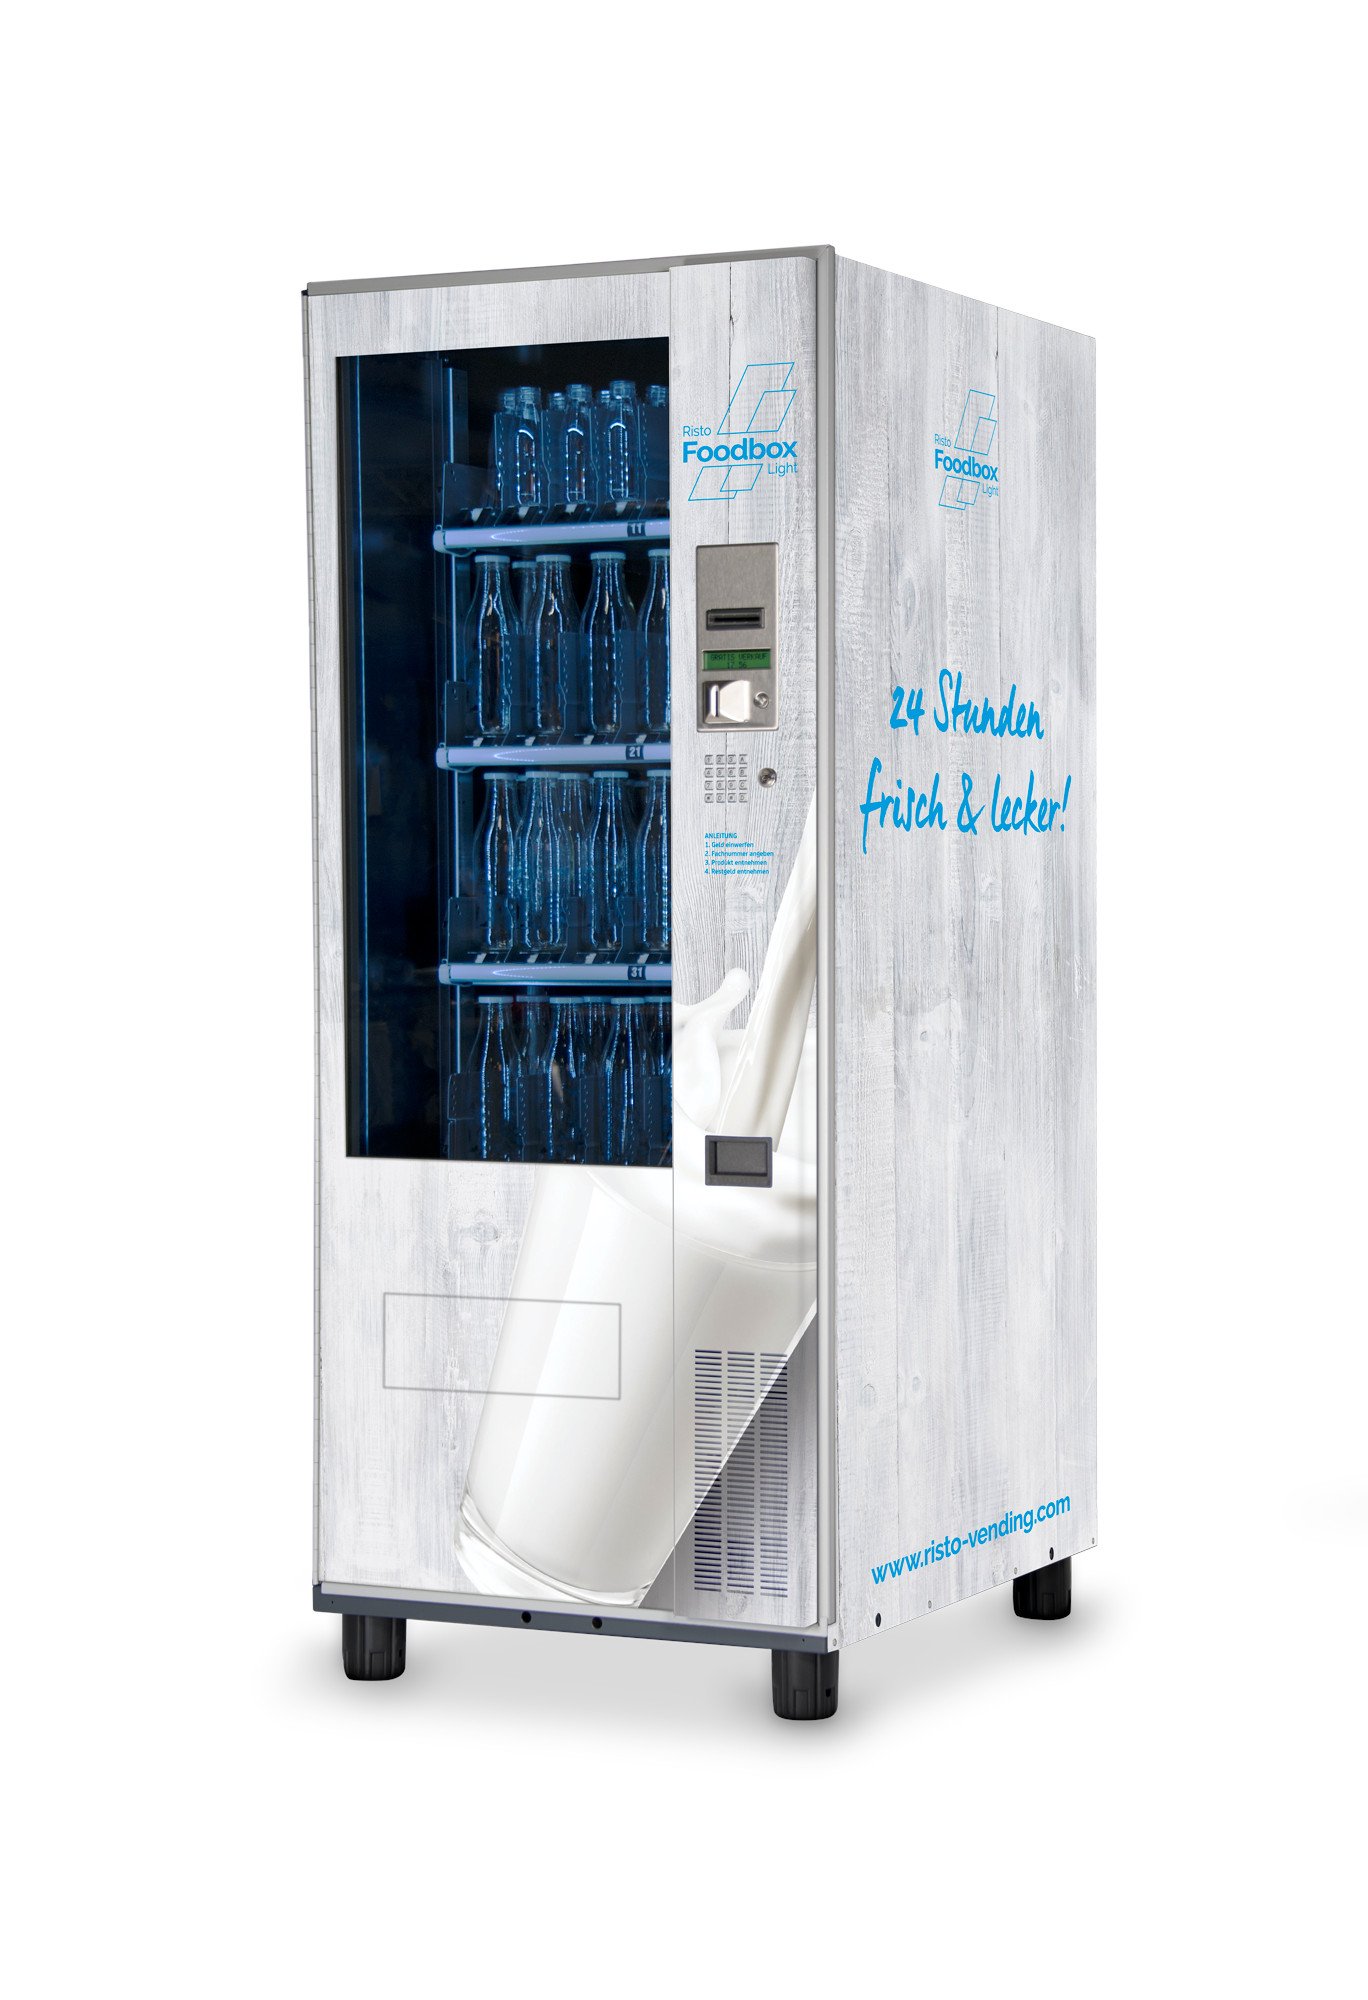 Flaschenautomat Foodbox Light Flaschenautomat-Warenautomat-Foodbox-Light-Bottle-Vending-Machine-Weiss